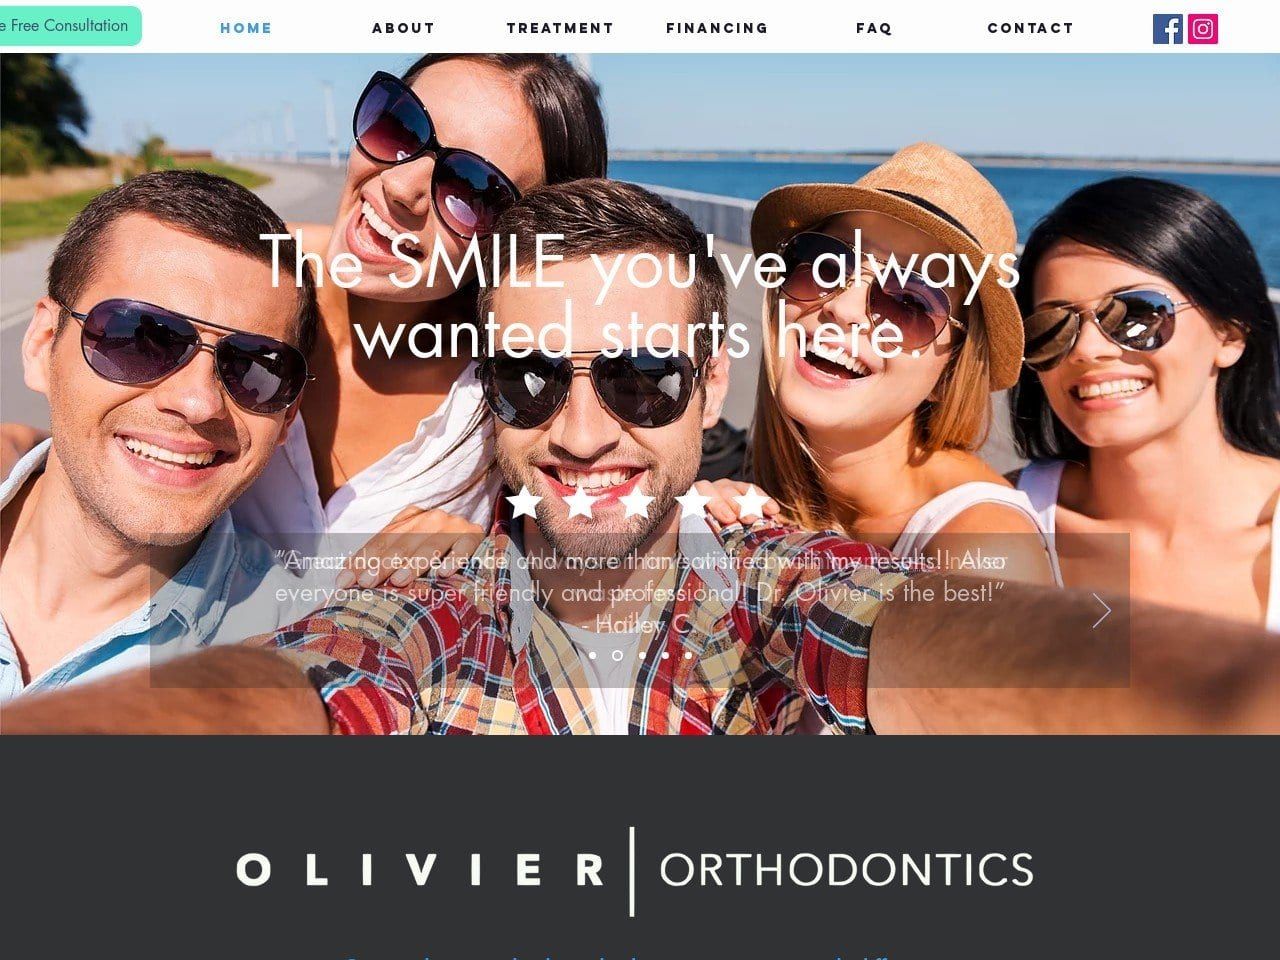 Olivier Orthodontics Olivier J Brian DDS Website Screenshot from olivierorthodontics.com